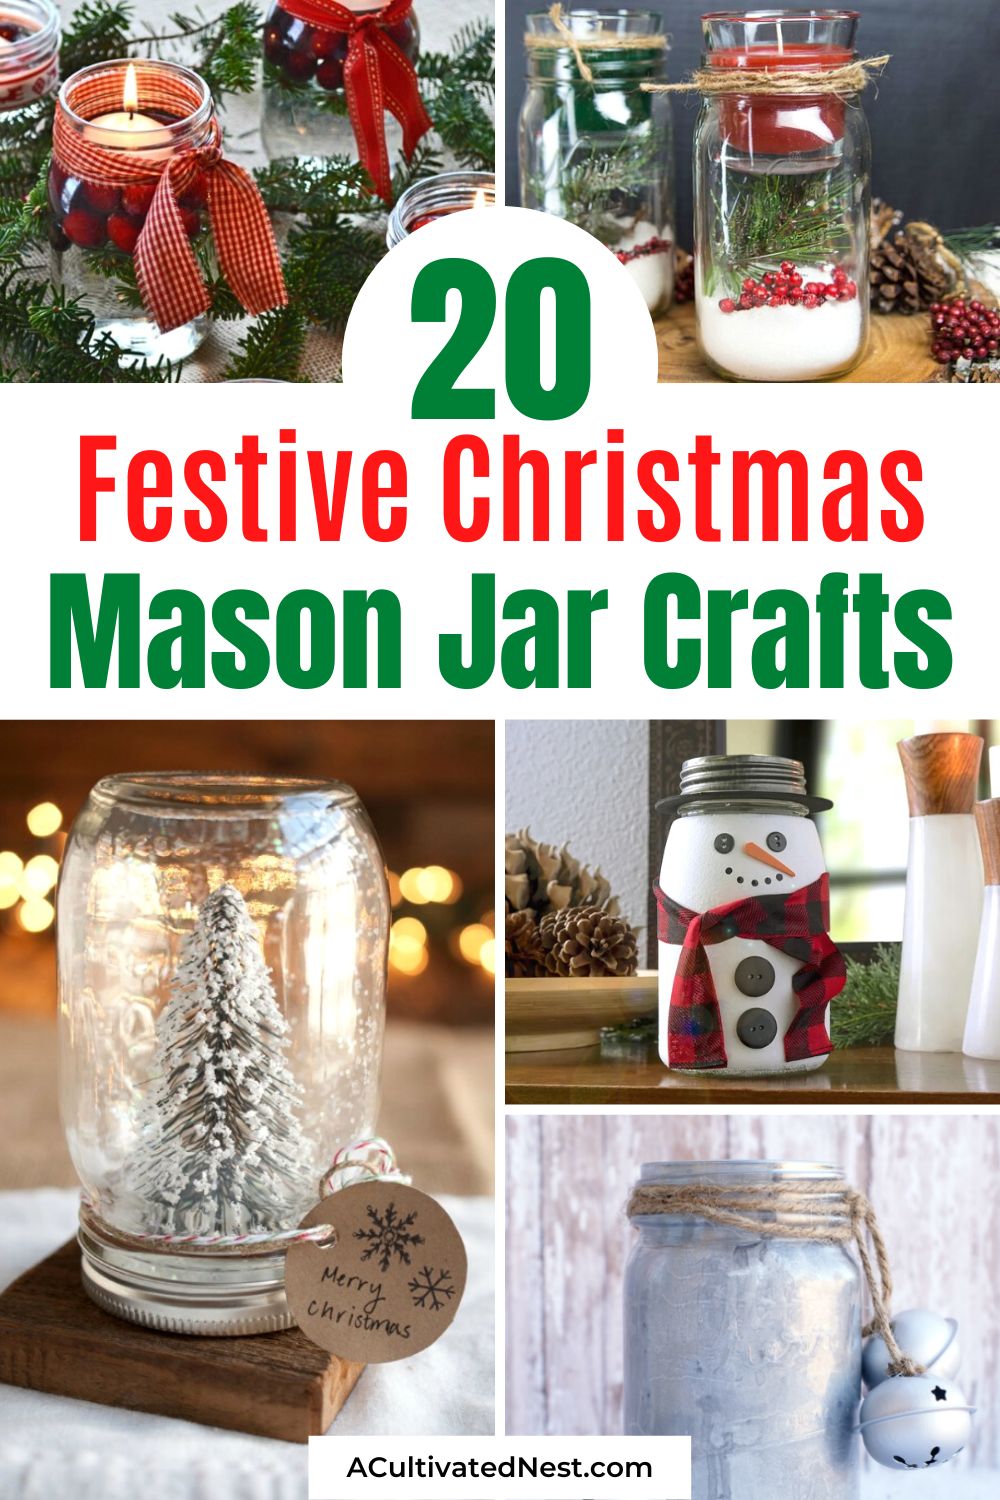 20 artisanat festif de Noël Mason Jar